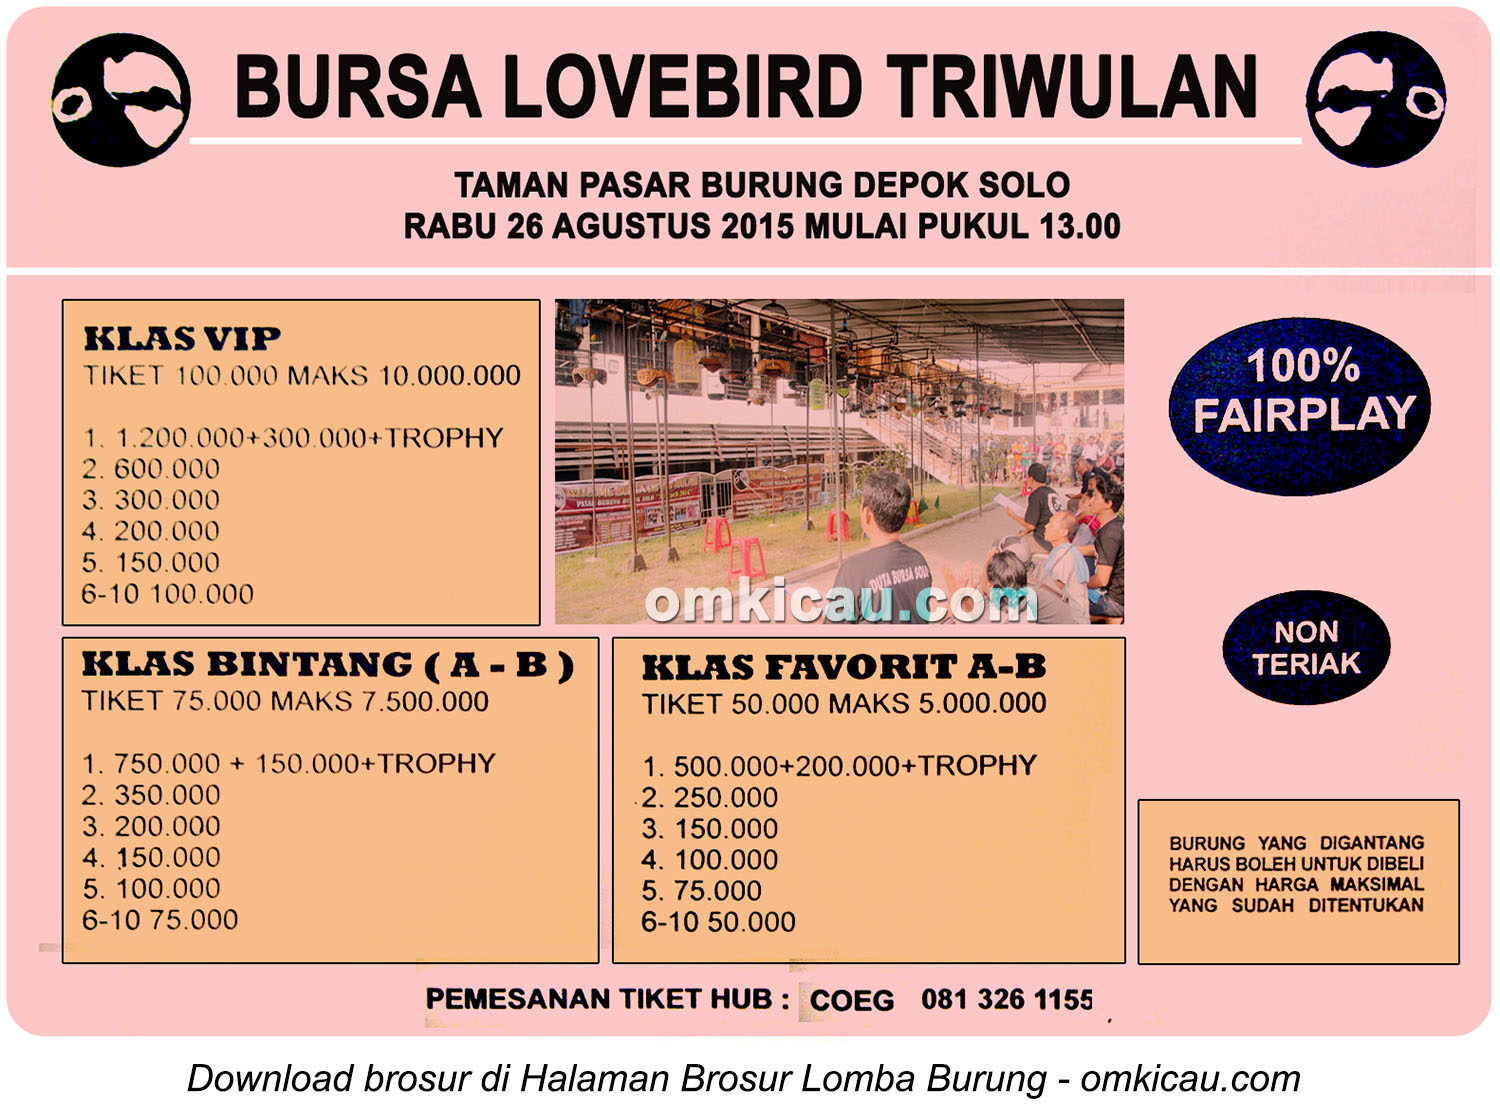 Brosur Bursa Lovebird Triwulan, PB Depok Solo, 26 Agustus 2015